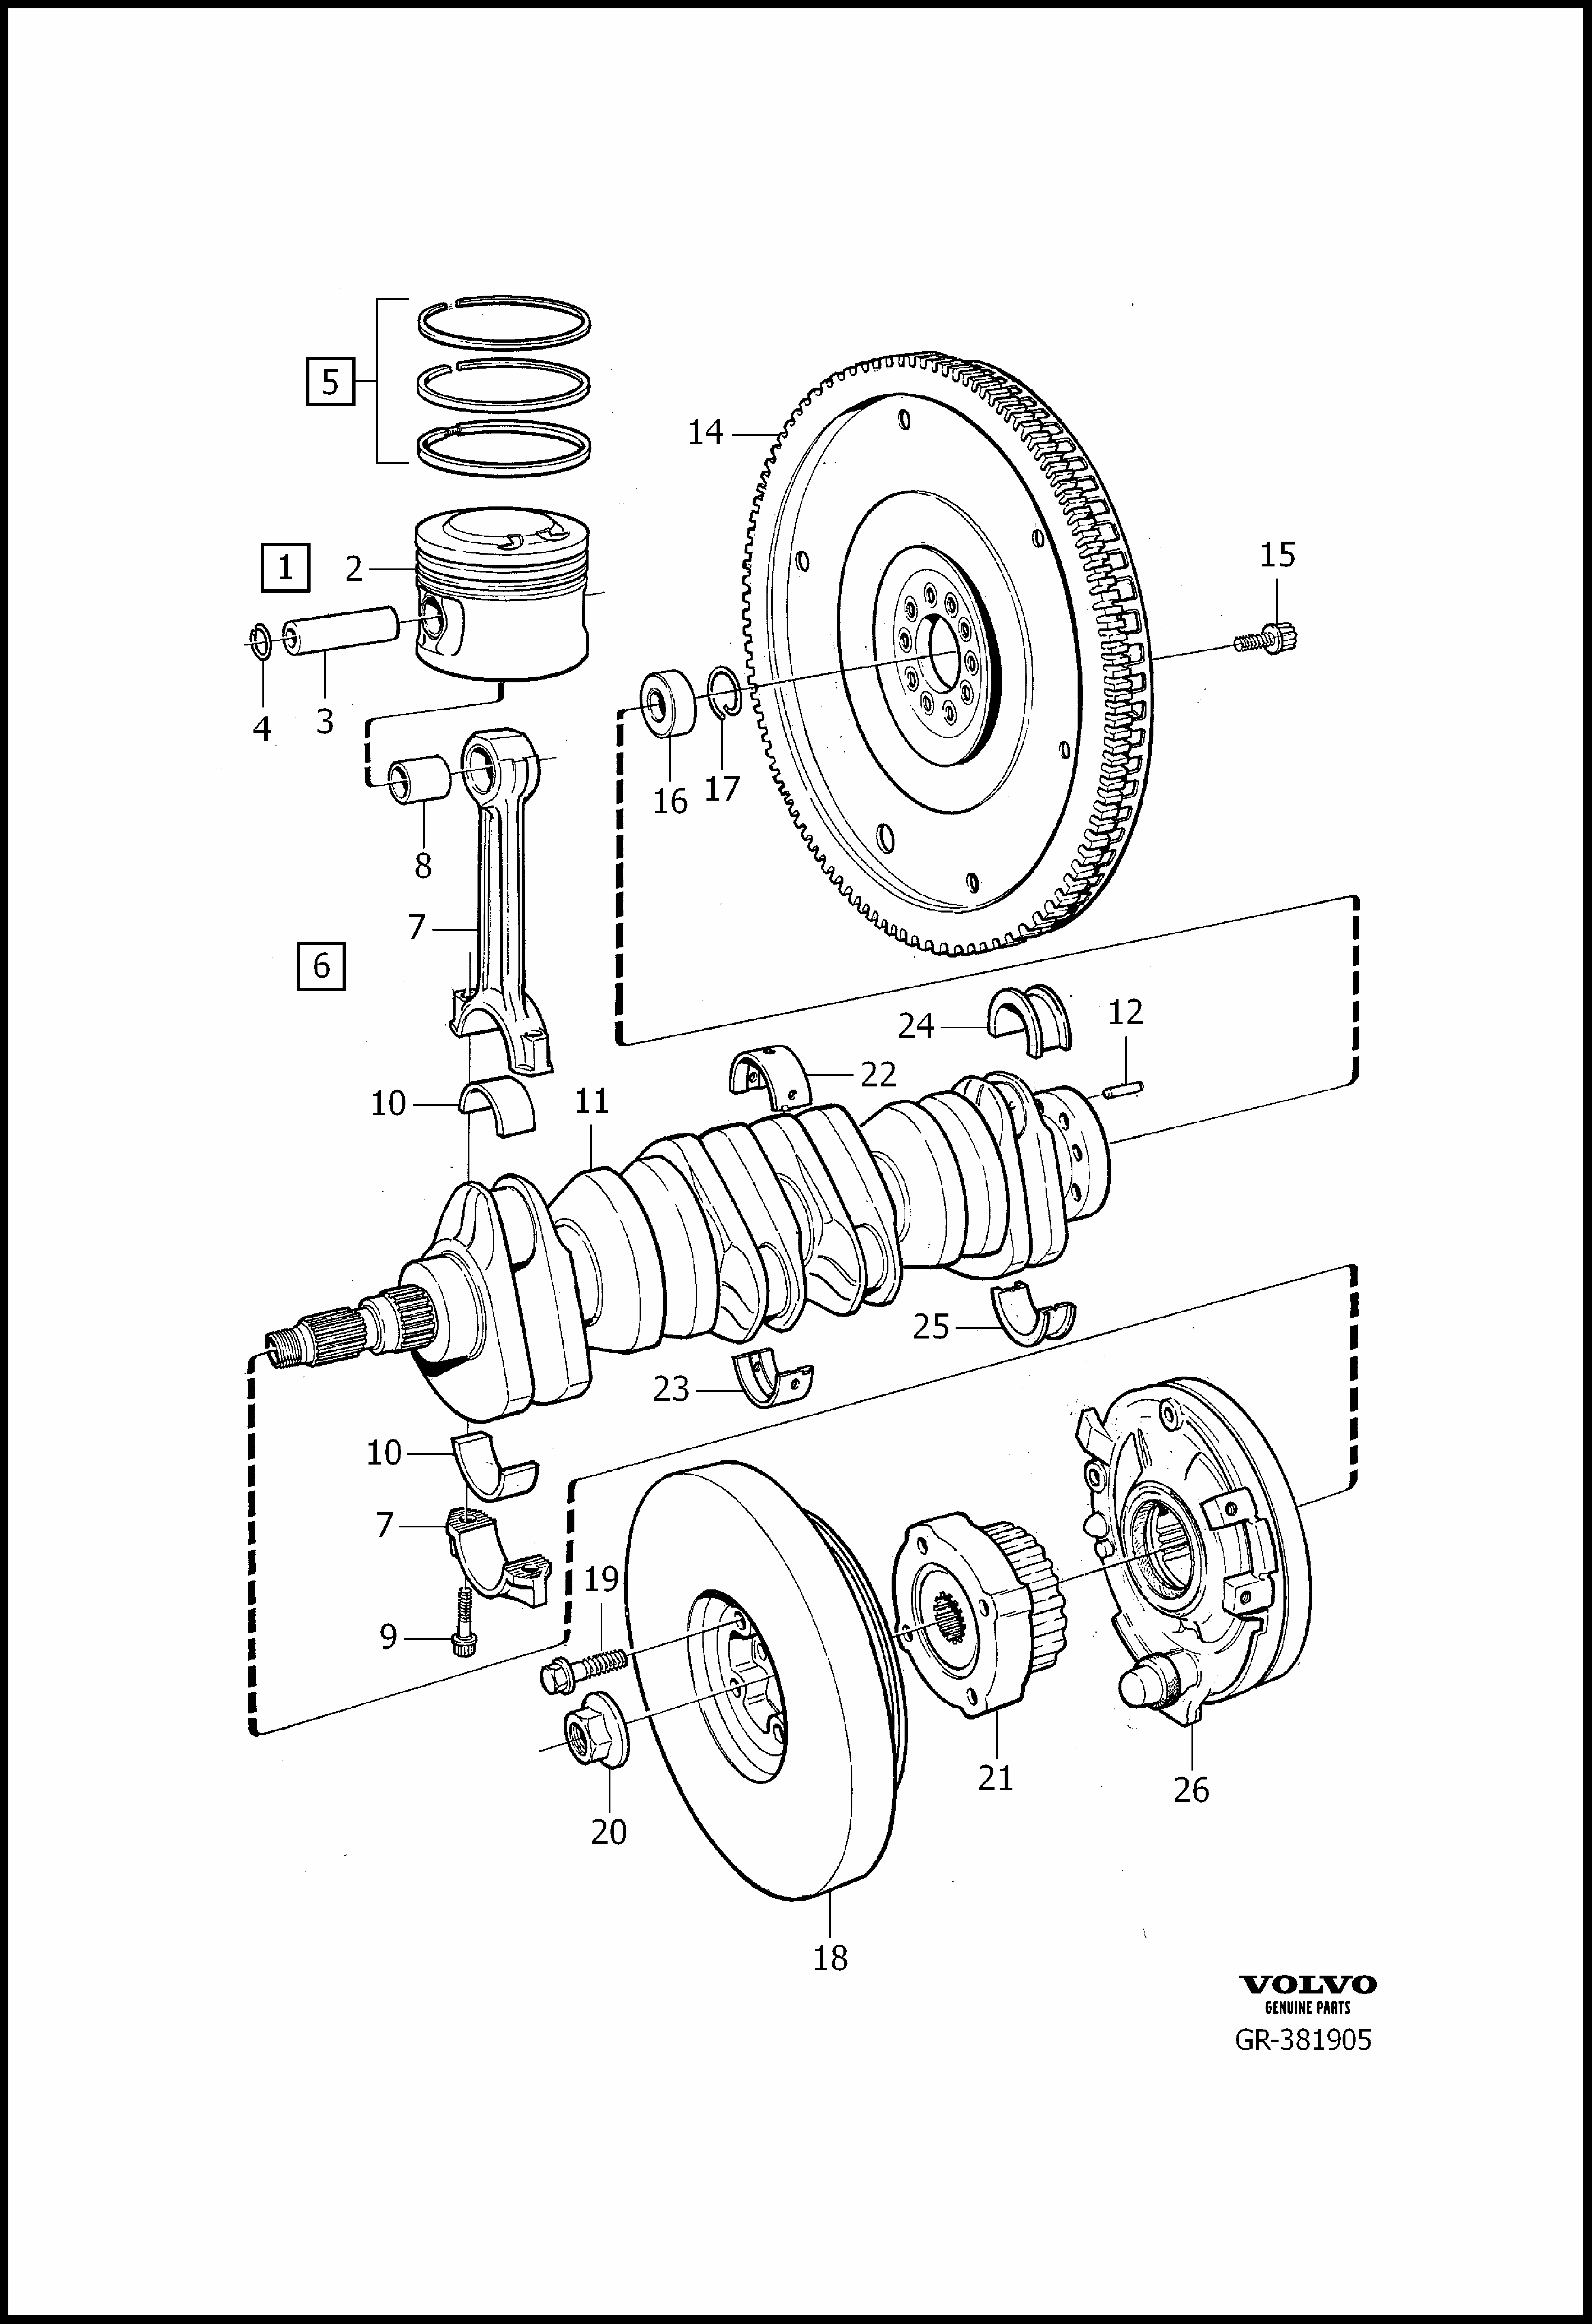 crank mechanism dla Volvo 960 960